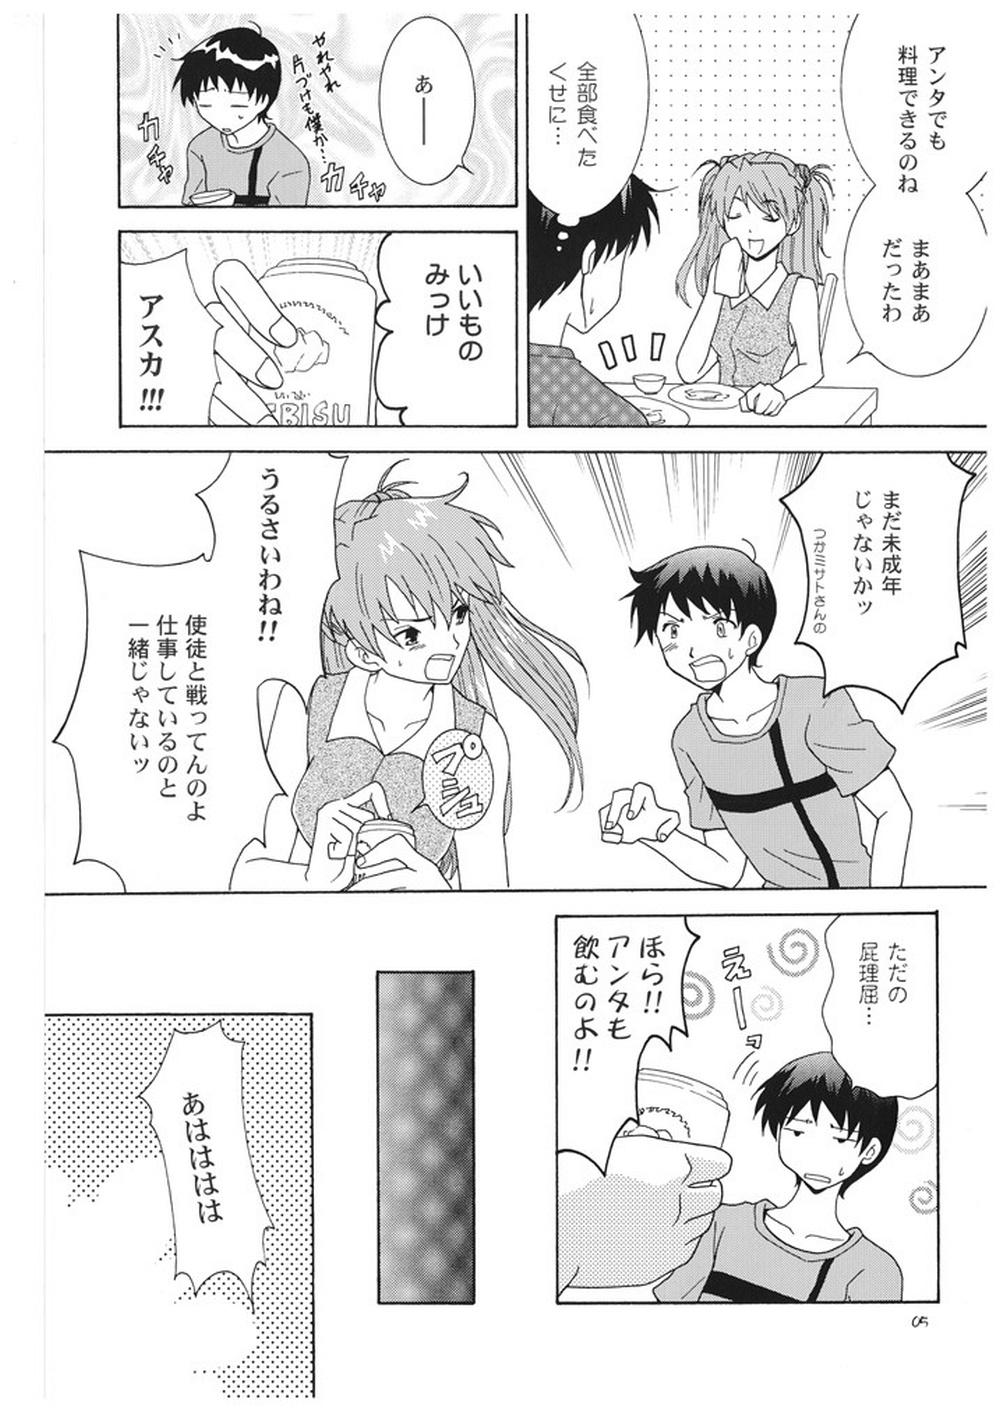 Scandal kimitoboku - Neon genesis evangelion Ex Girlfriends - Page 4